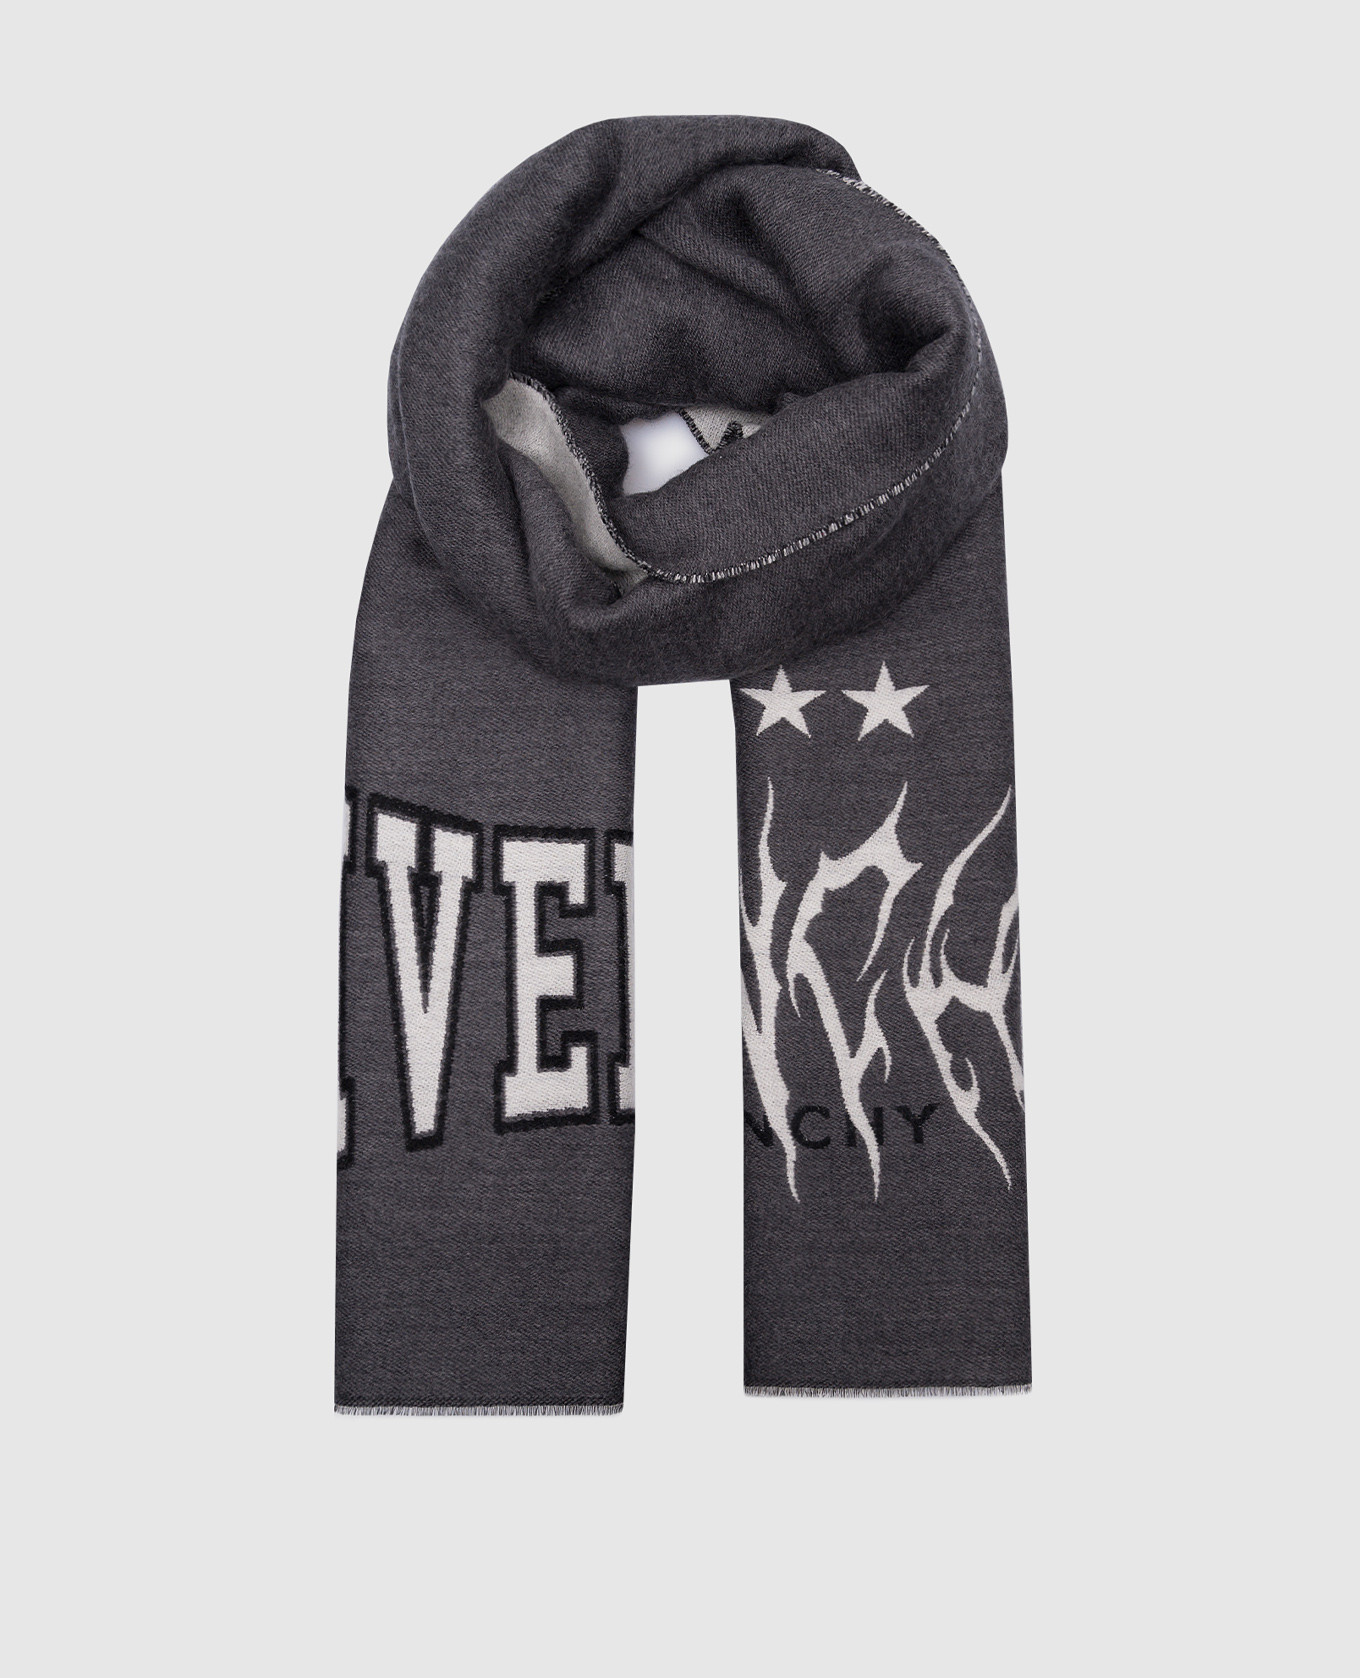 Серый шарф из шерсти и шелка с логотипом.